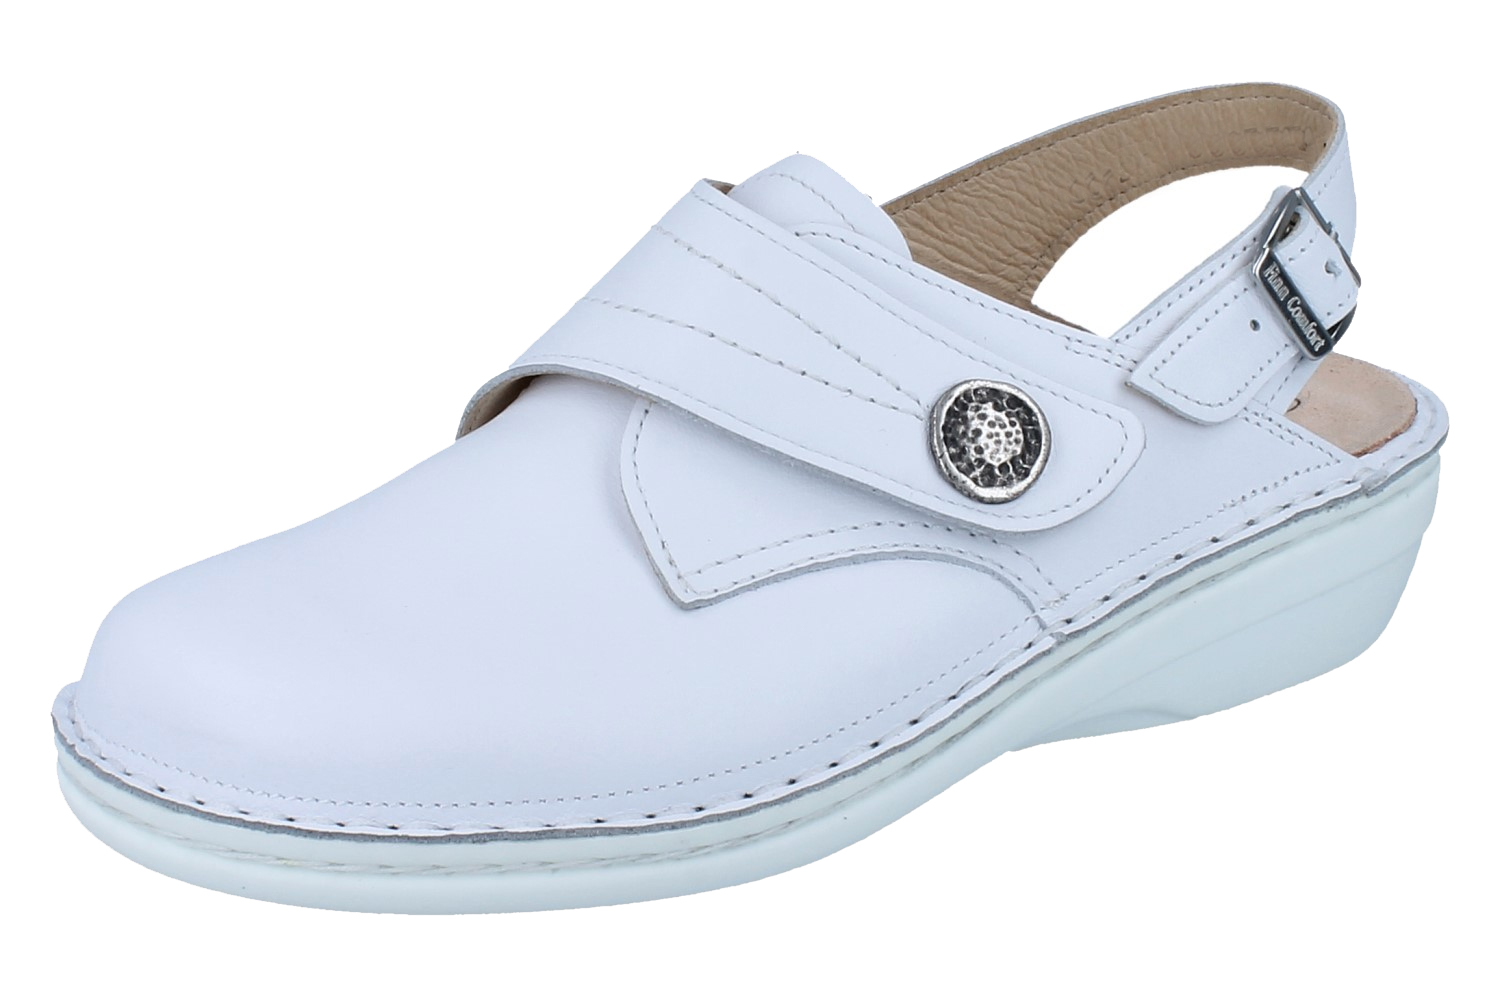 Schuhbeutel incl Finn Comfort Veracruz S in weiß mit Riemen Softfußbett 